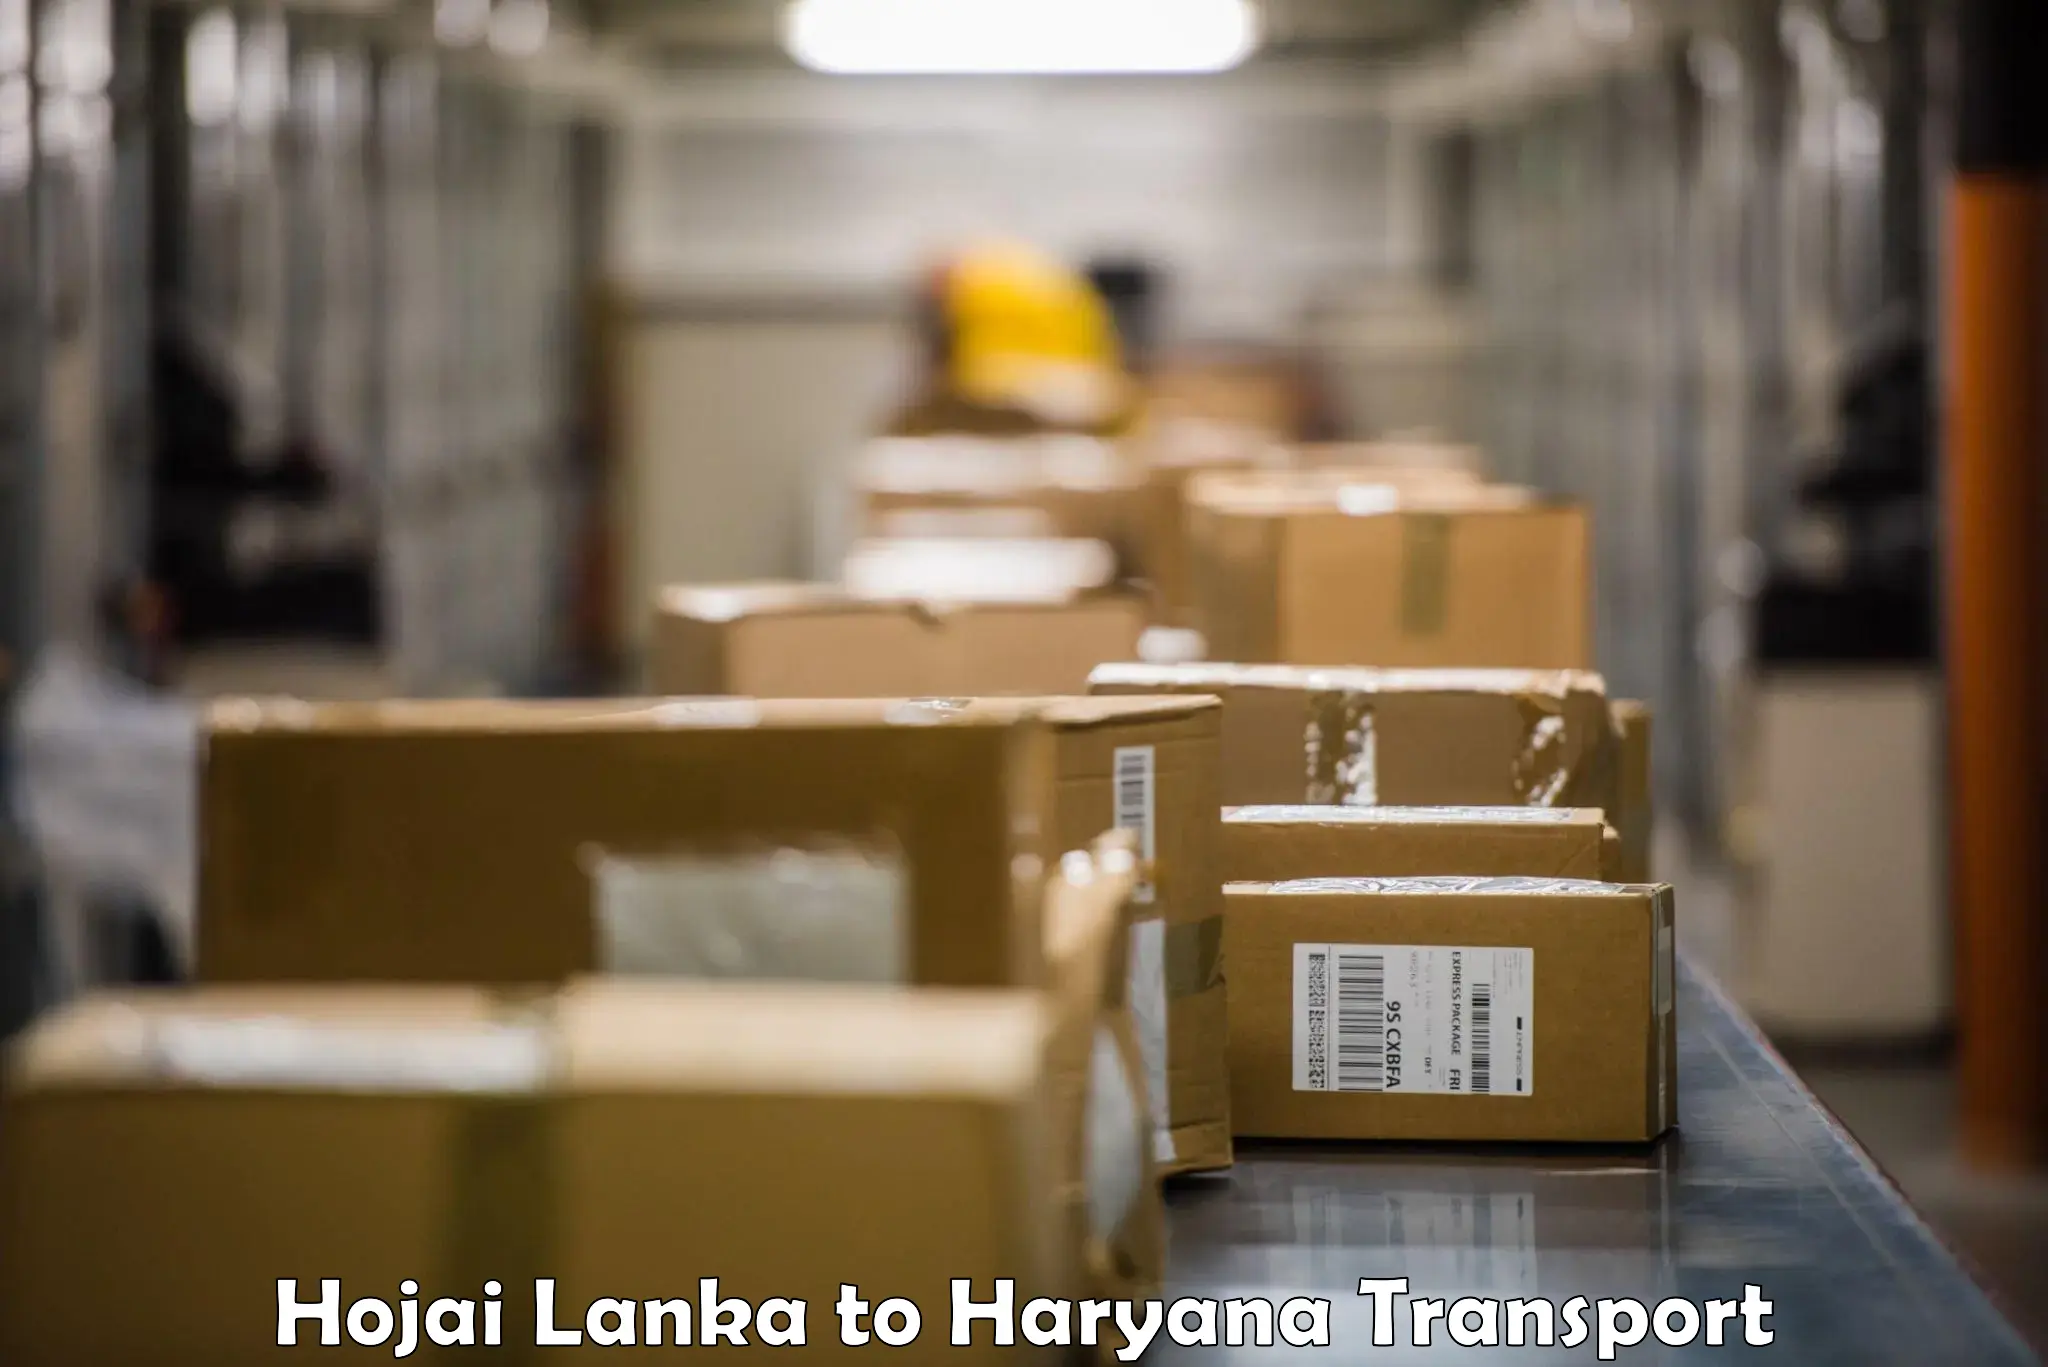 Furniture transport service Hojai Lanka to Kurukshetra